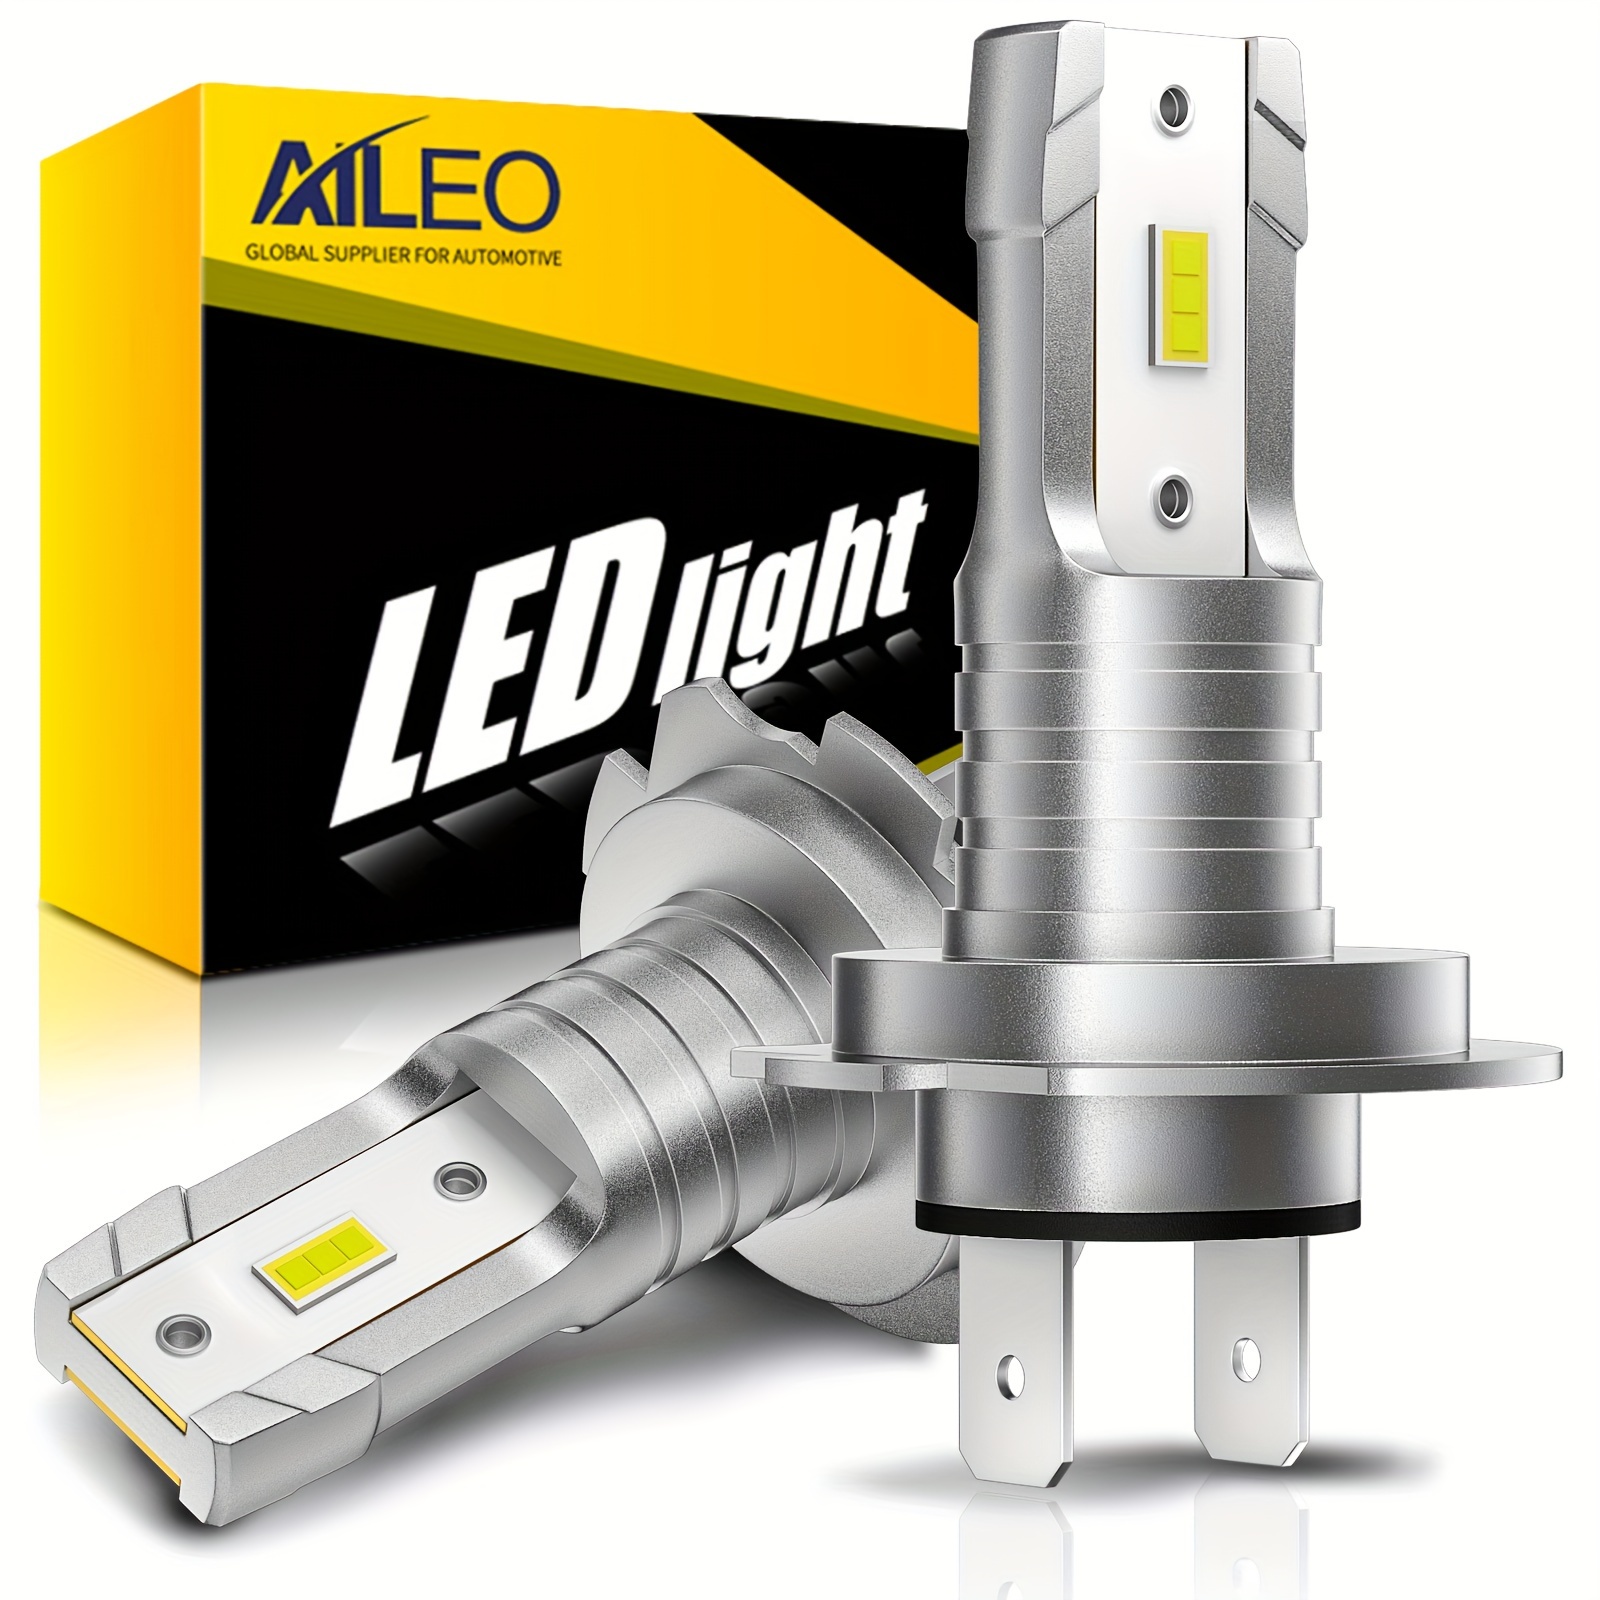 

Aileo 2pcs H7 Led Fog Light Bulbs Fanless Wireless Led Fog Light Projector 6500k Csp 12000lm Super Bright 1:1 Mini Size Design Plug & Play